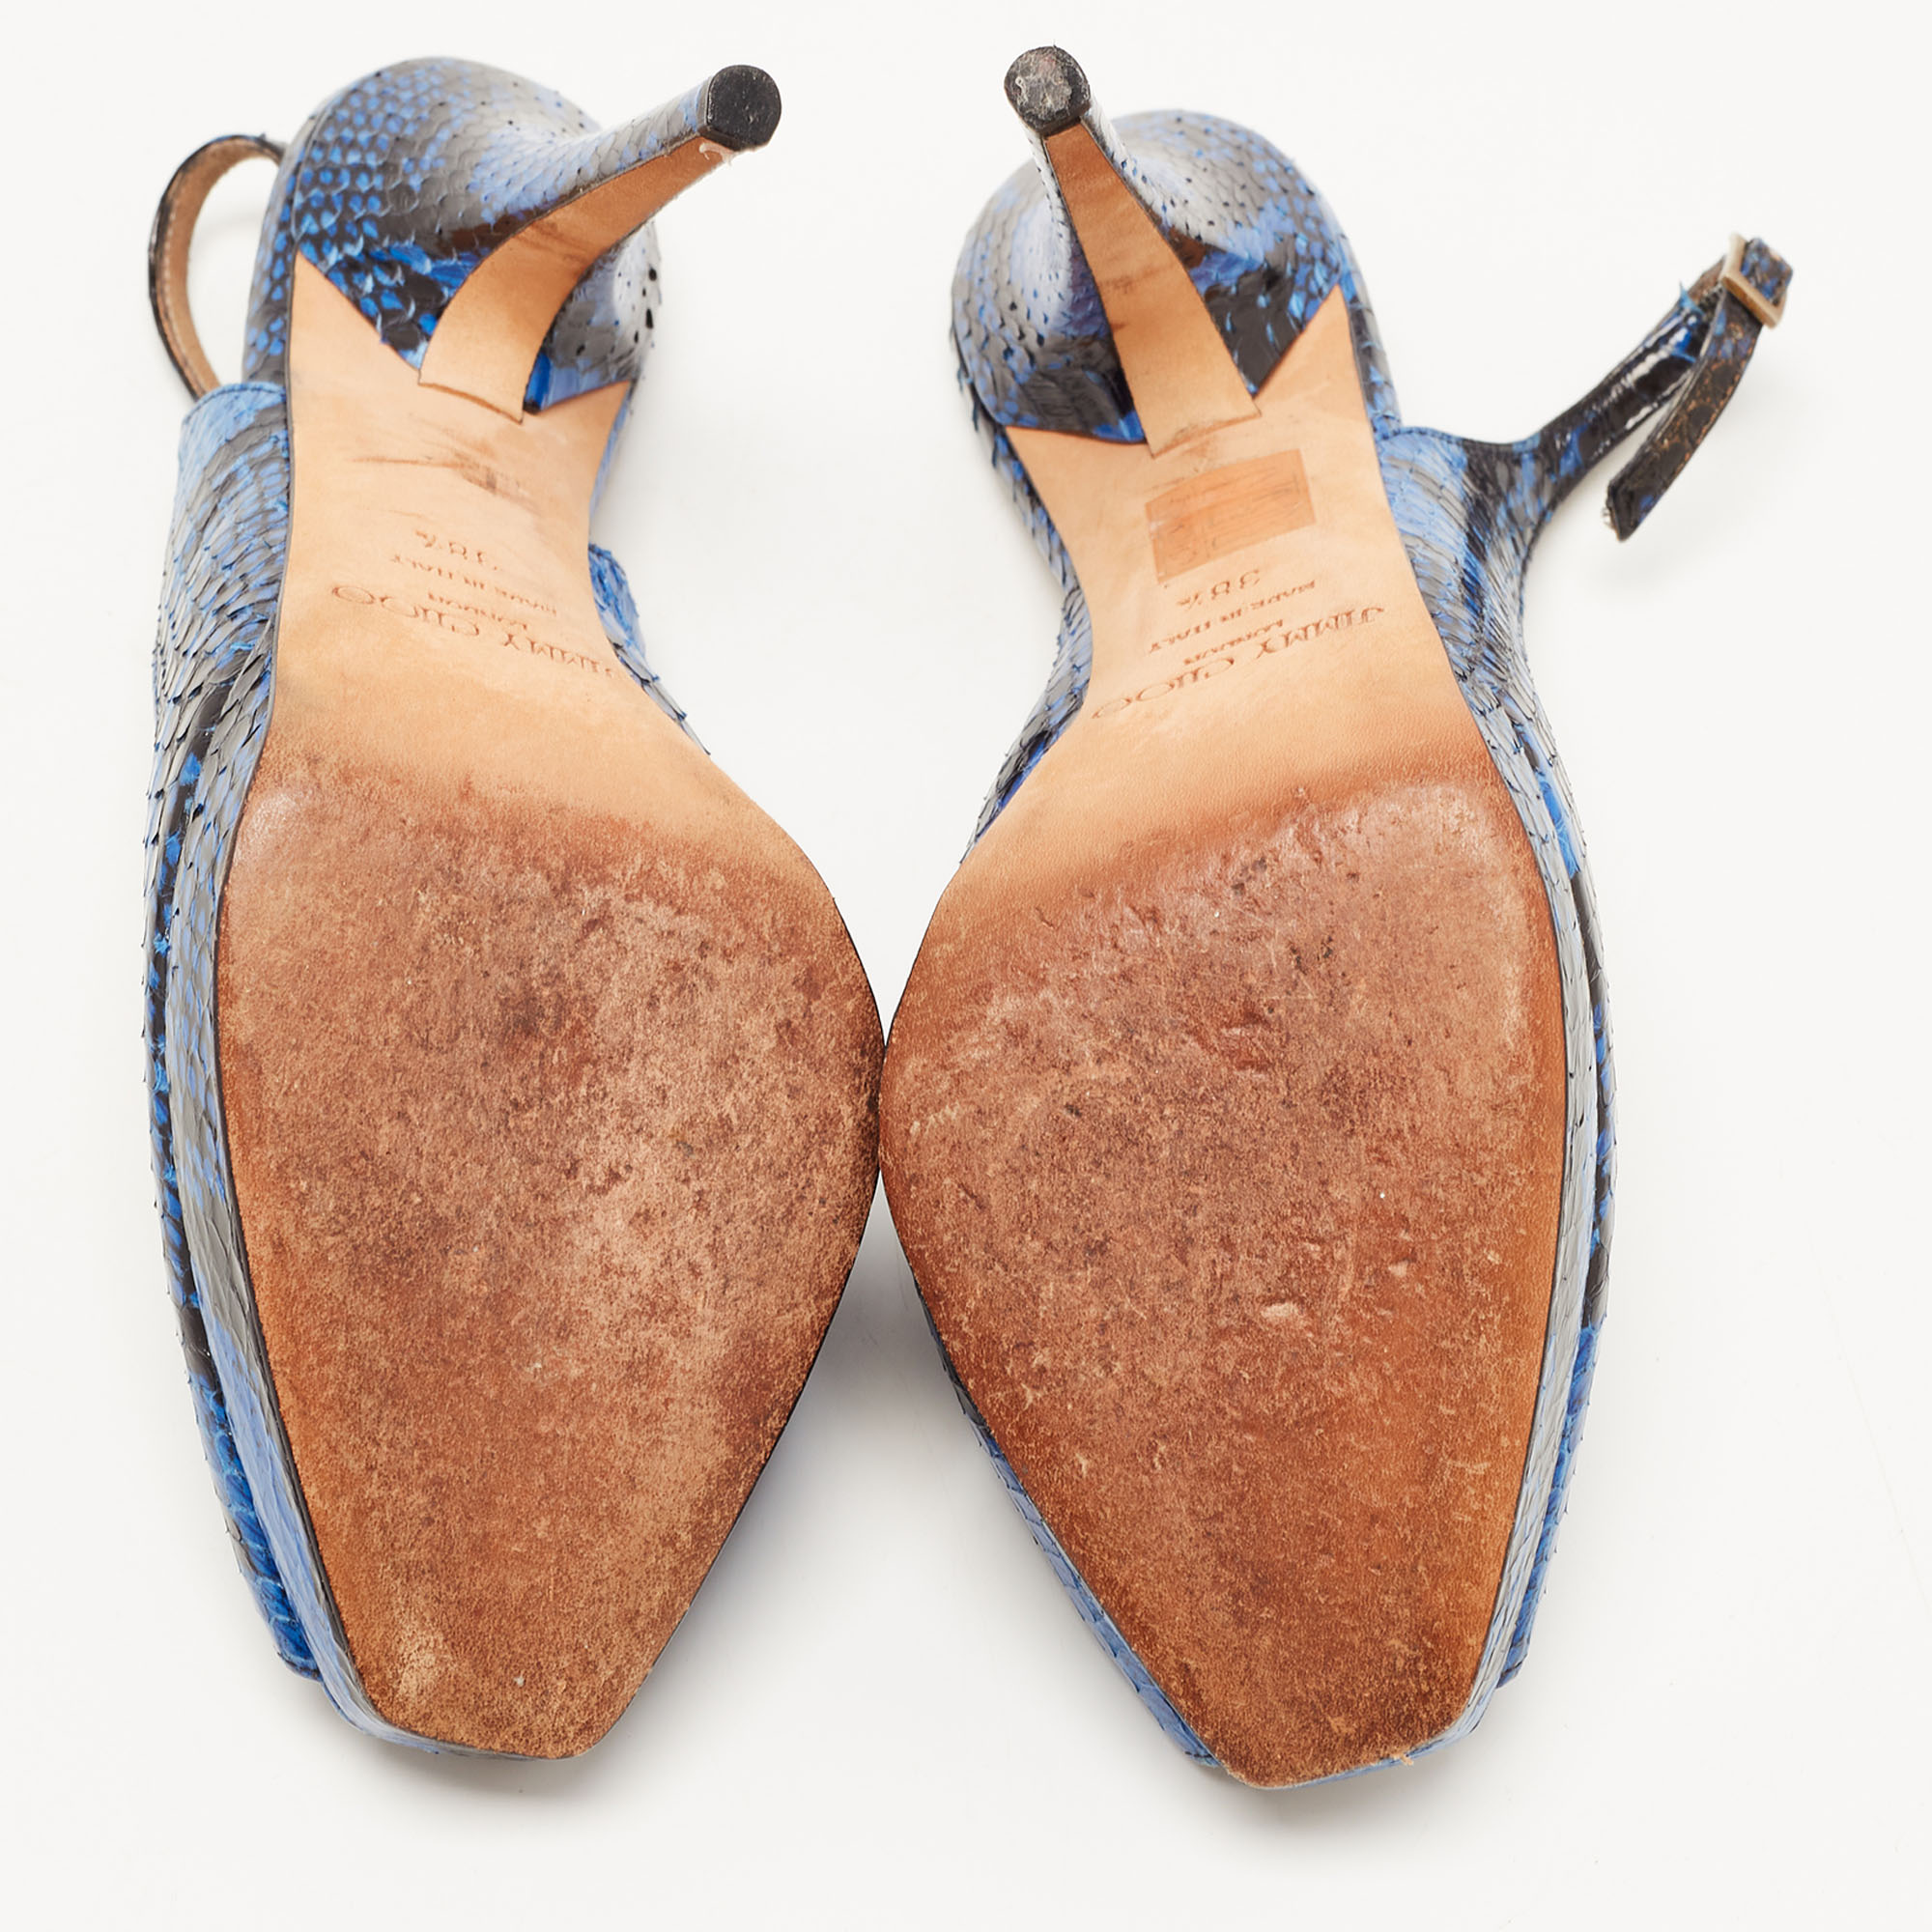 Jimmy Choo Black/Blue Python Leather Peep Toe Platform Slingback Sandals Size 38.5